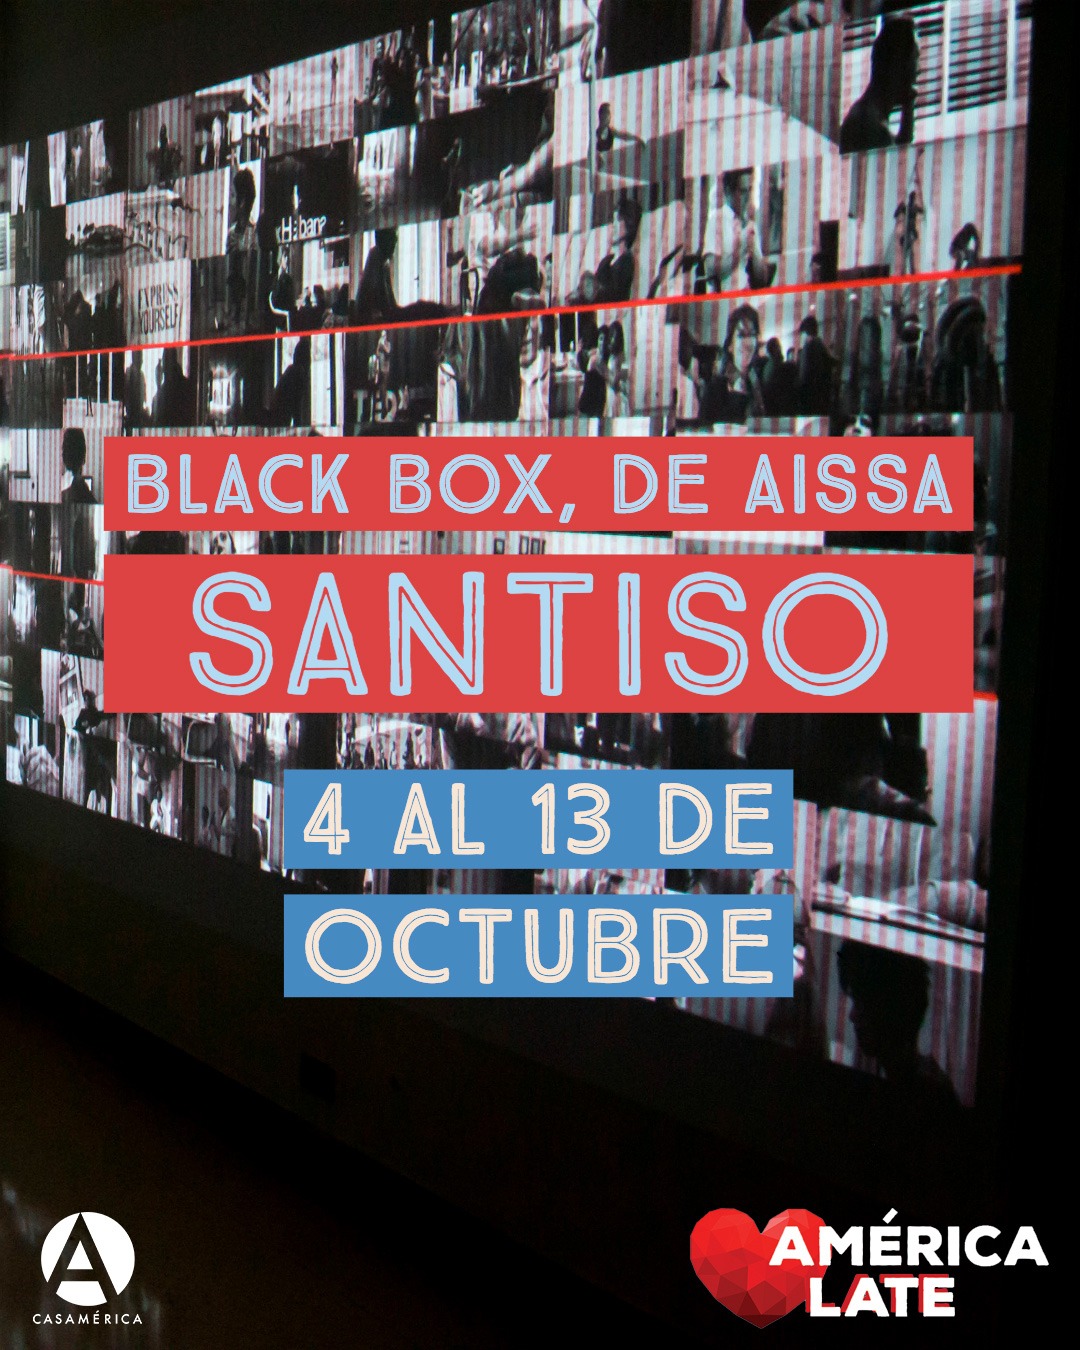 BLACK BOX aissa santiso. casa de america 2018 (2)